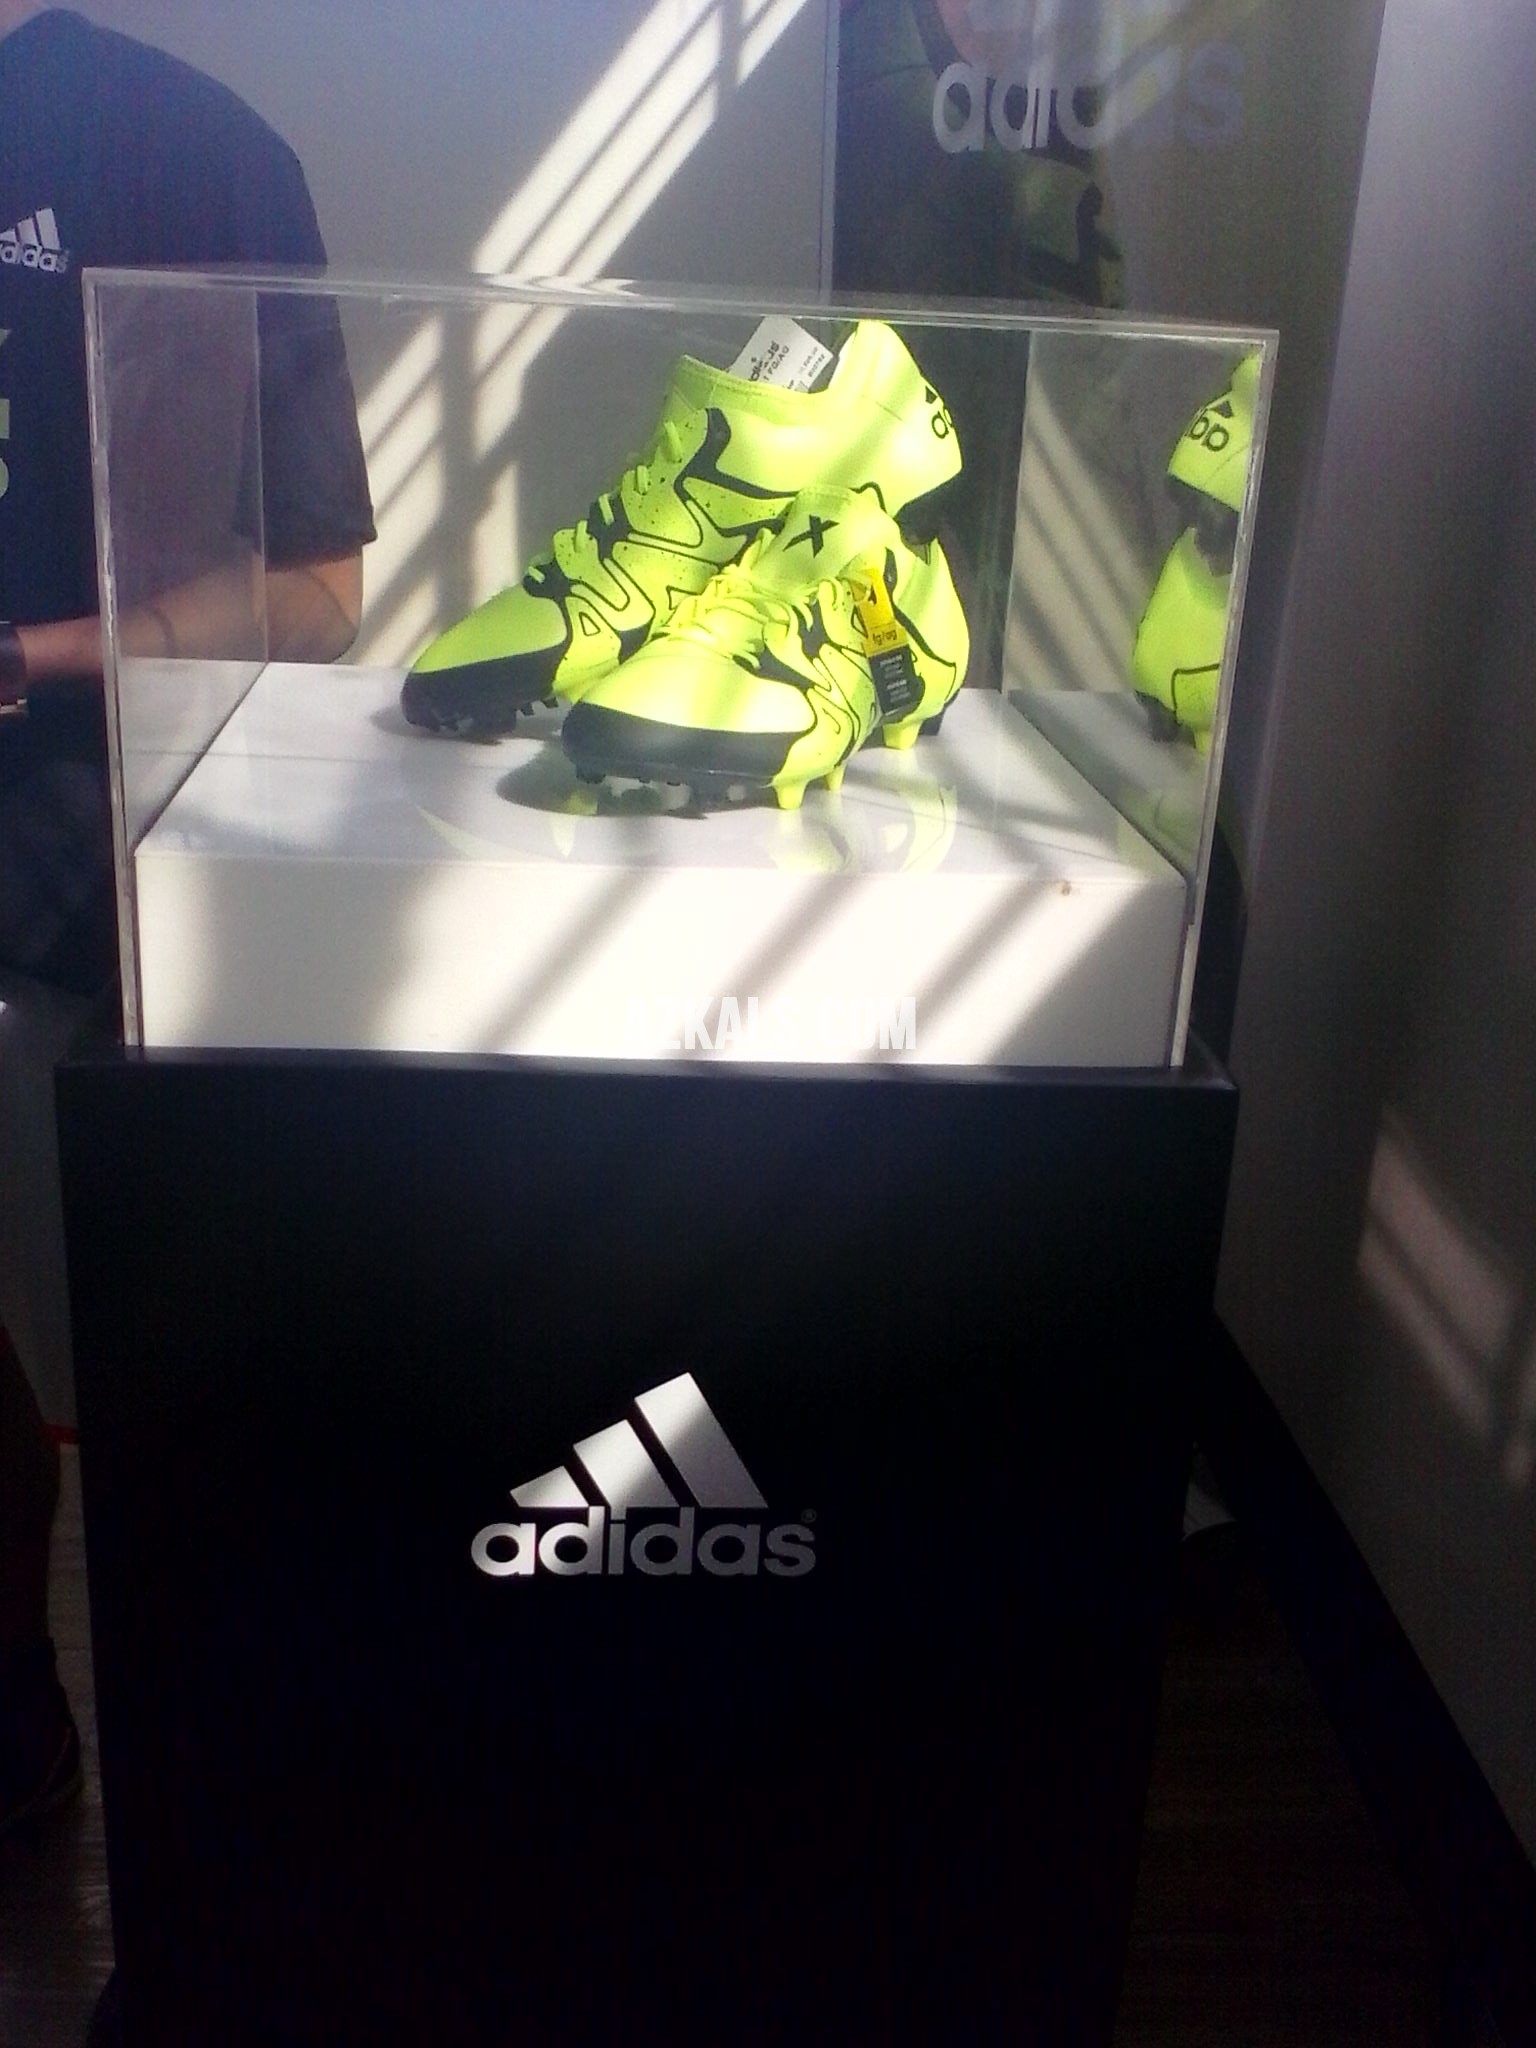 adidas X15 in display